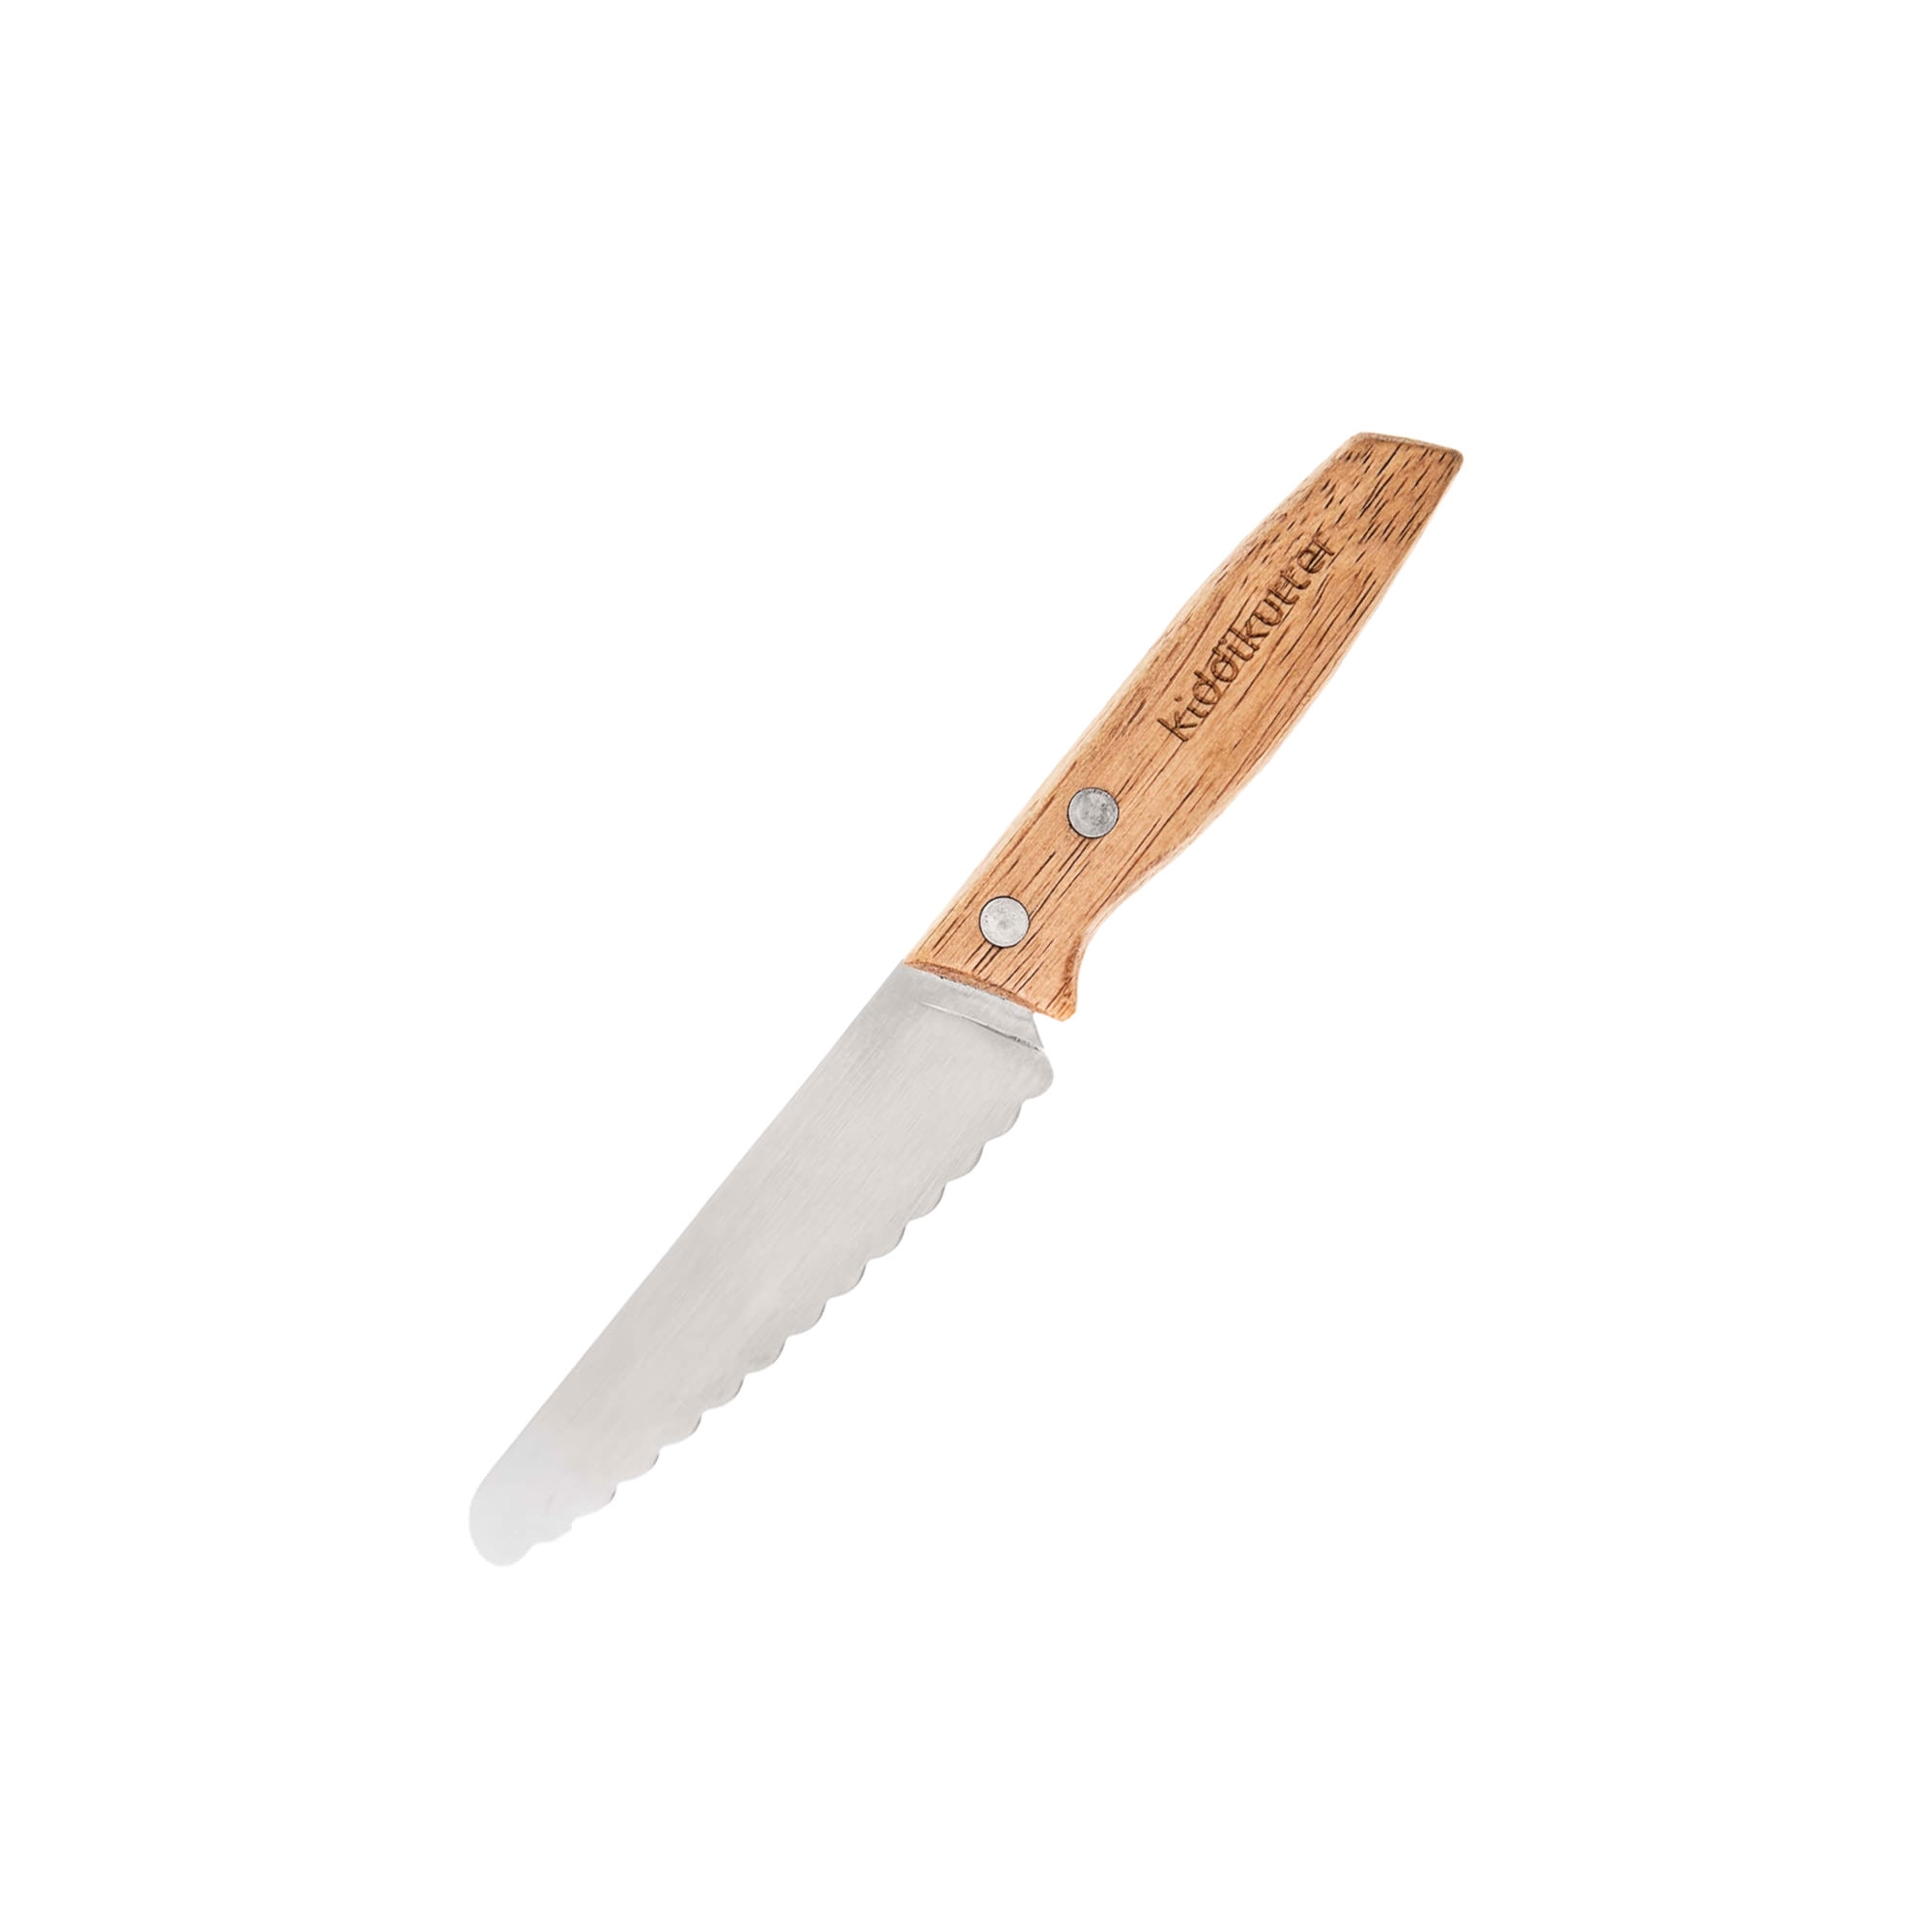 Kiddikutter Child Safe Knife with Wood Handle Image 1